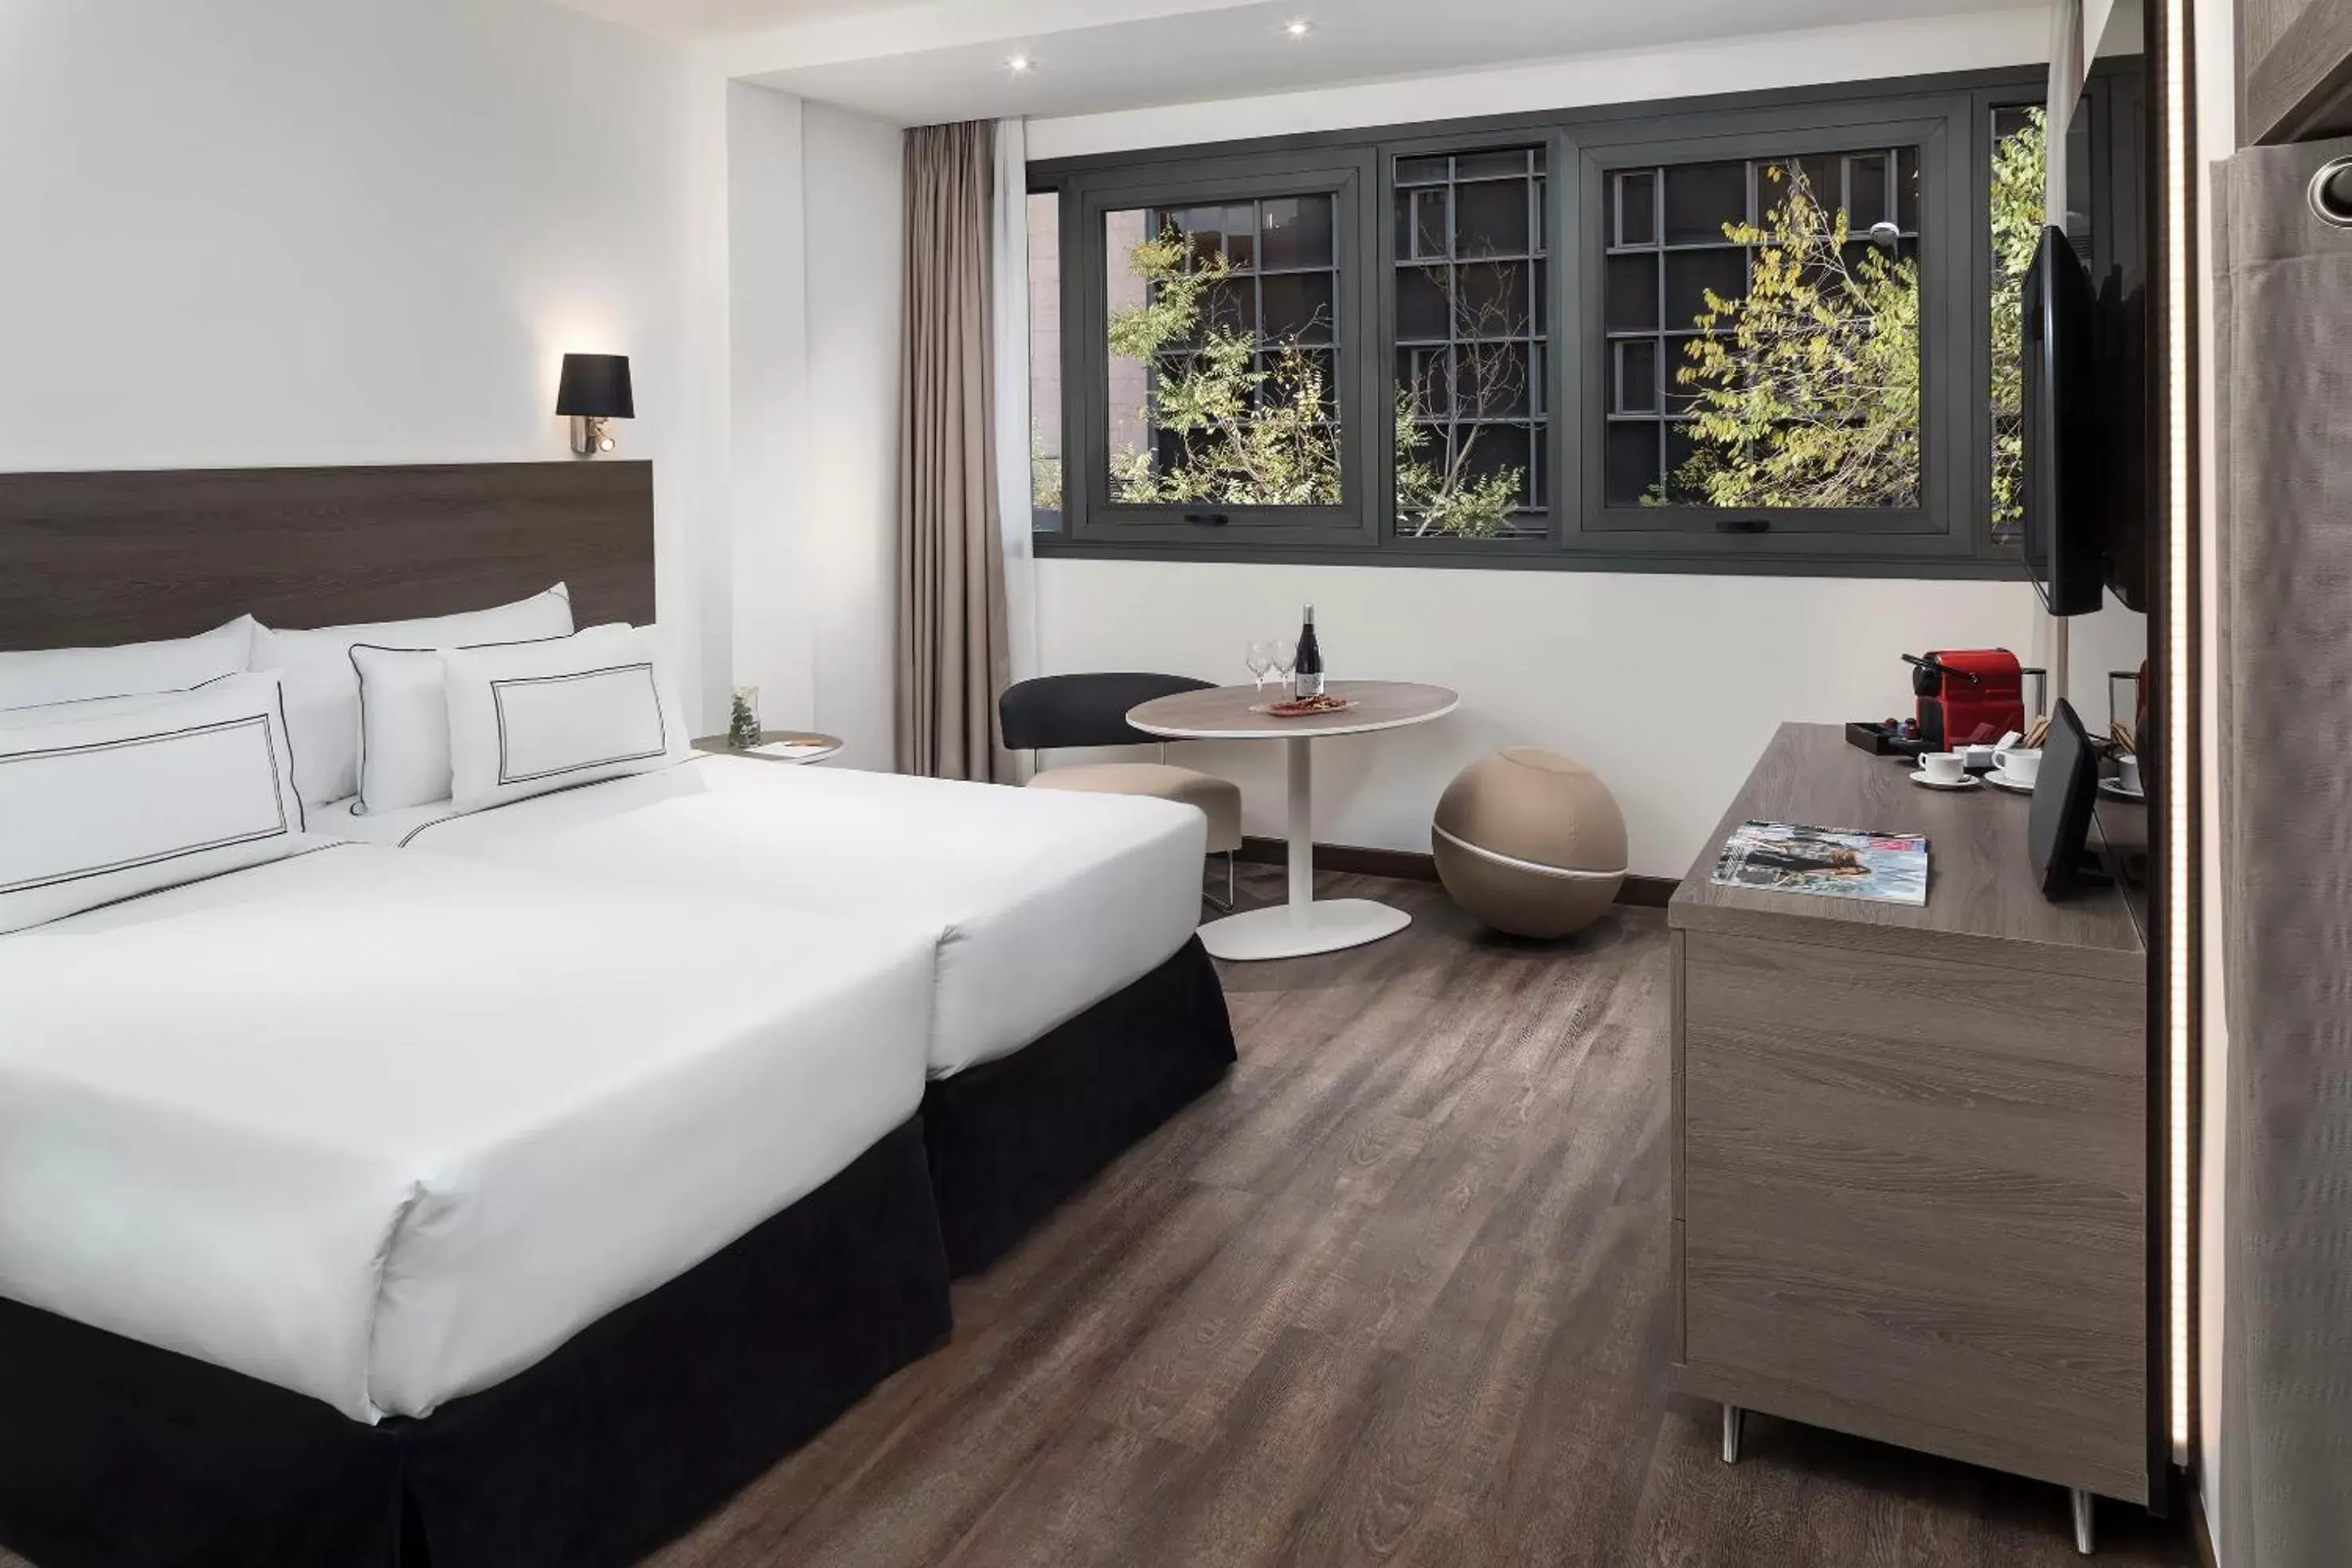 The Level Premium Room - single occupancy in Melia Madrid Serrano